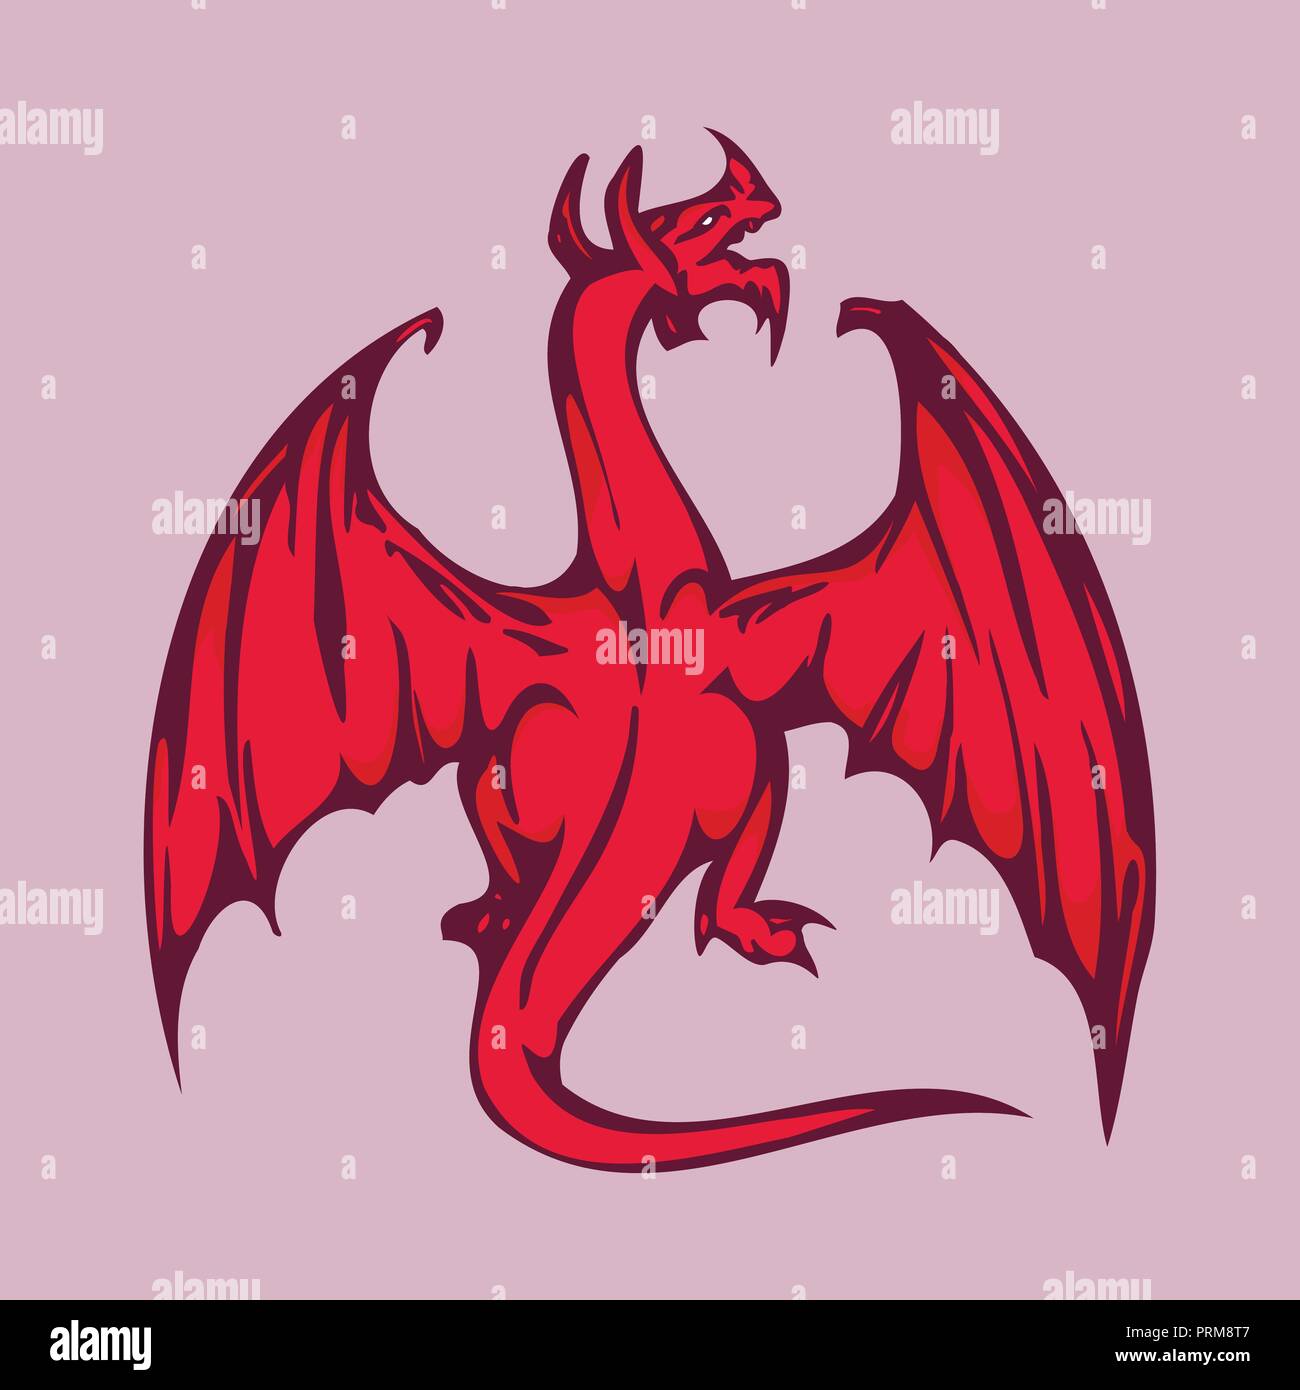 Red Dragon illustration design Stock Vector